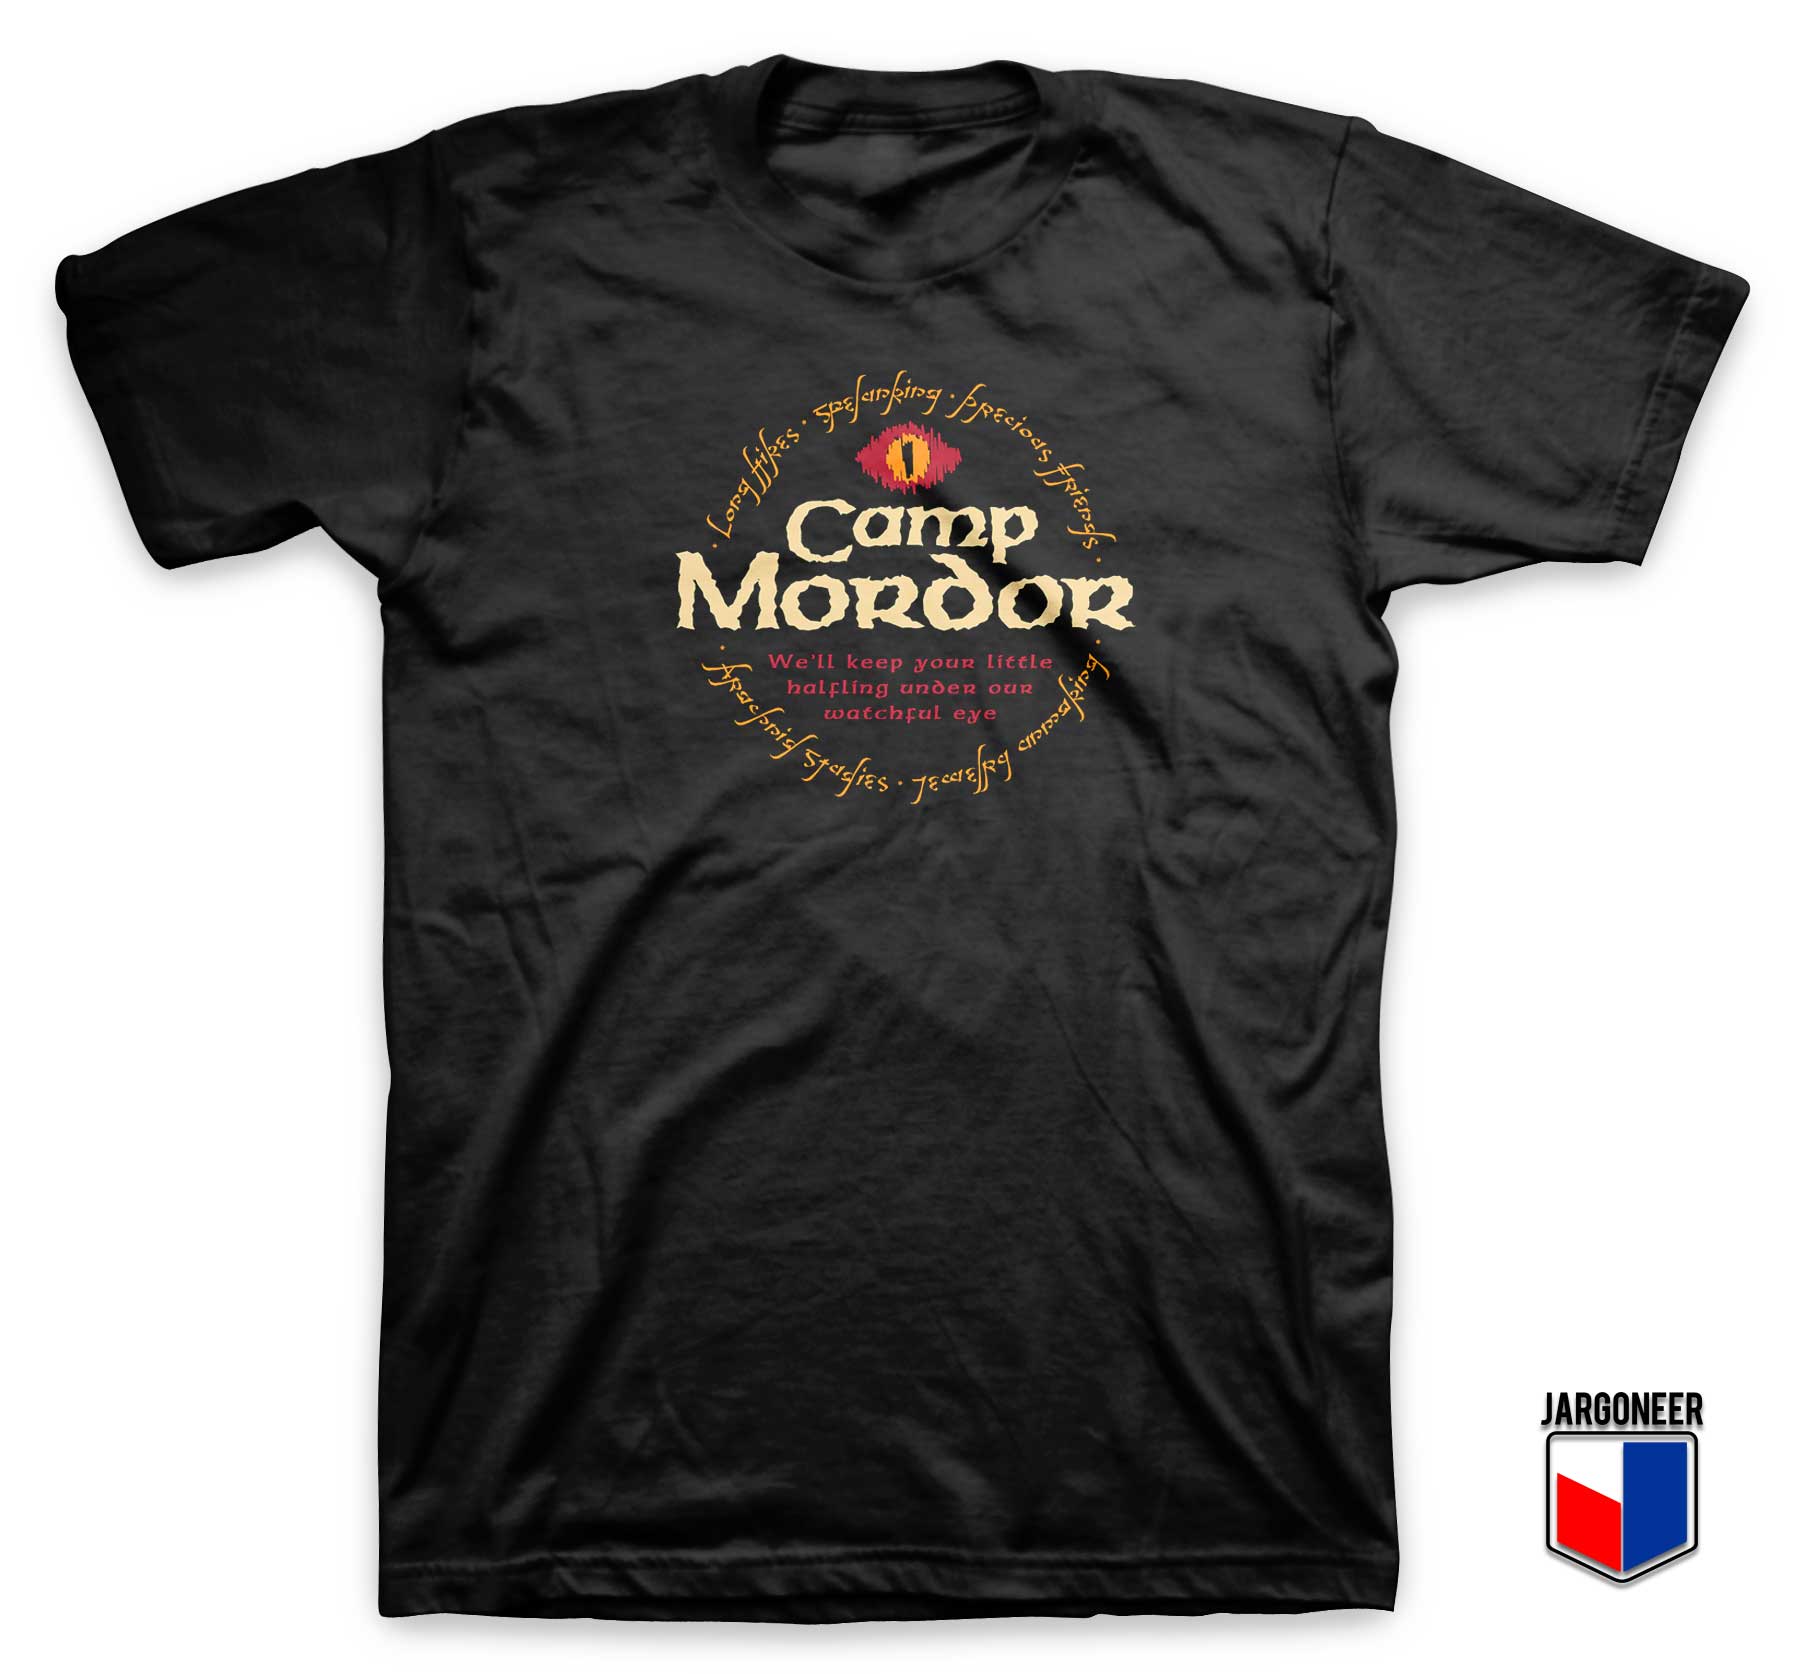 Camp Mordor T Shirt - Shop Unique Graphic Cool Shirt Designs